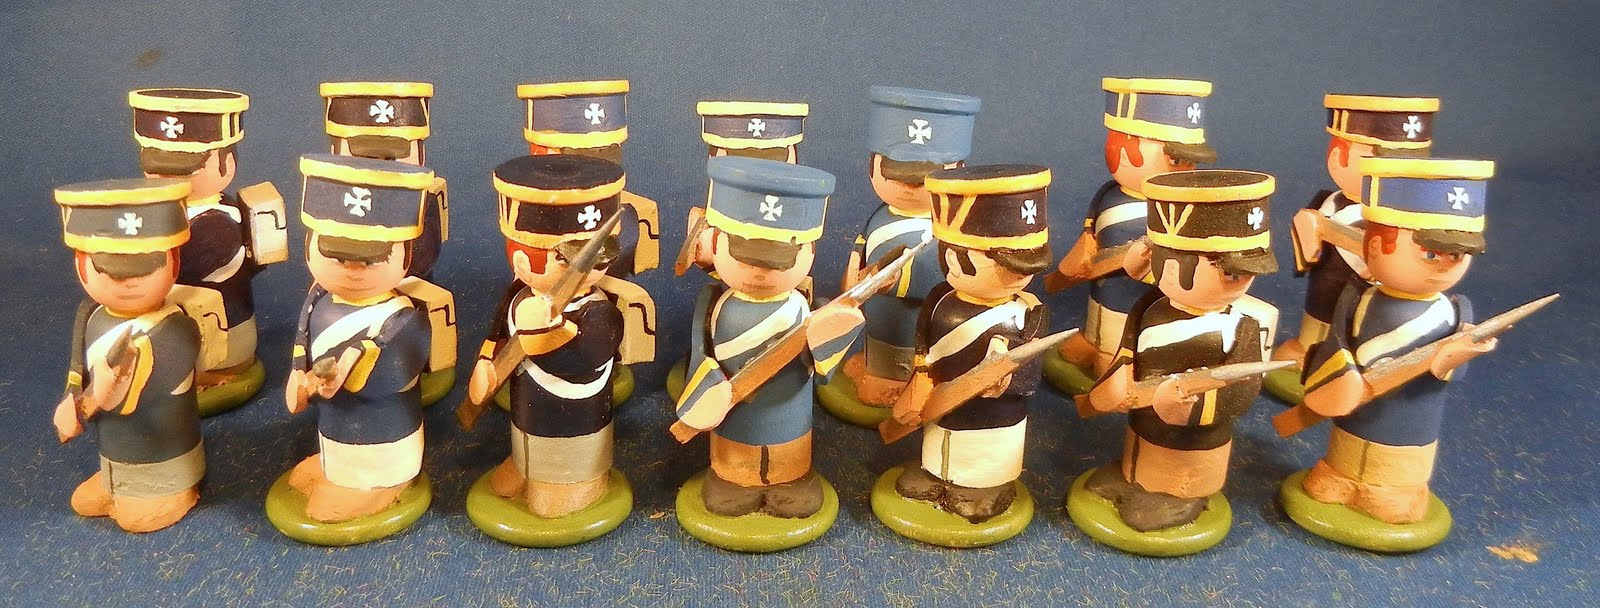 My toy soldier is very nice. Солдатики из дерева. Деревянный солдатик игрушка. Деревянные солдаты игрушки. Деревянные фигурки солдатиков.